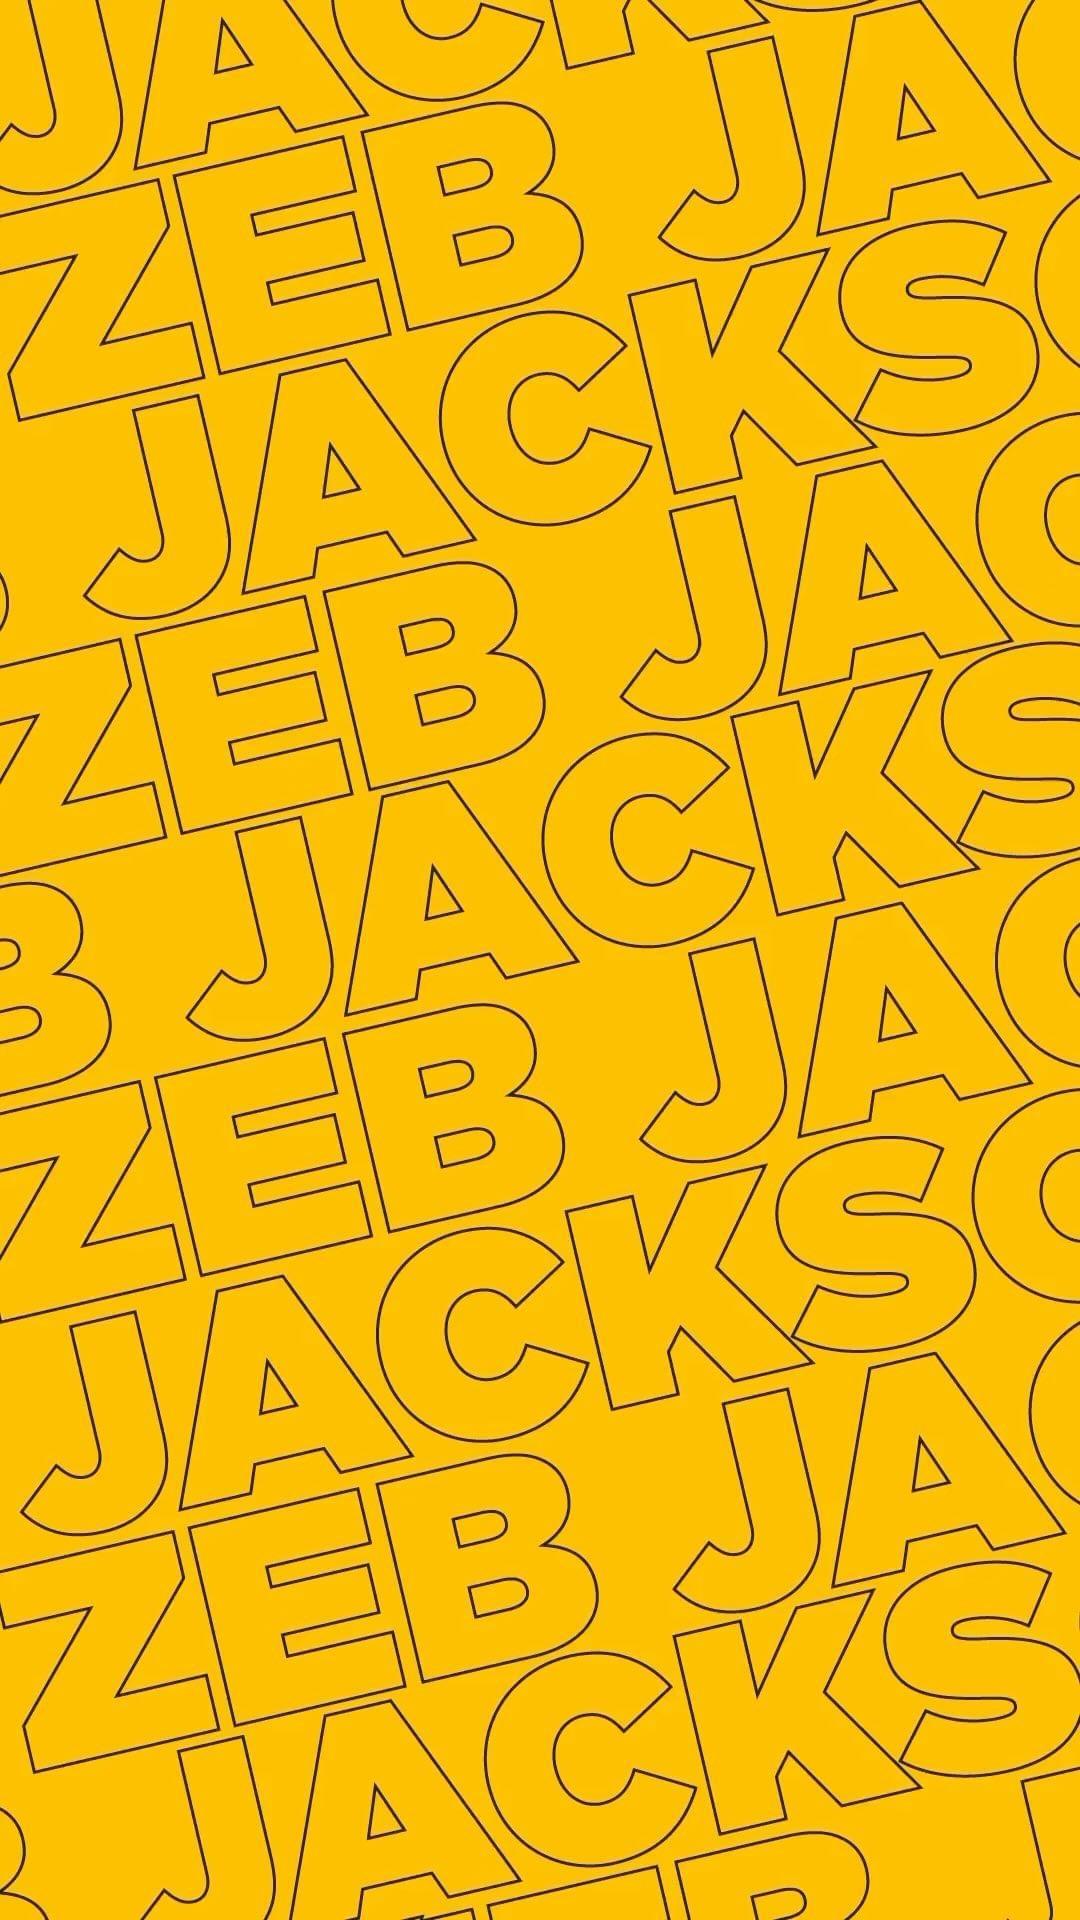 Zeb Jackson Instagram Post Influencer Campaign